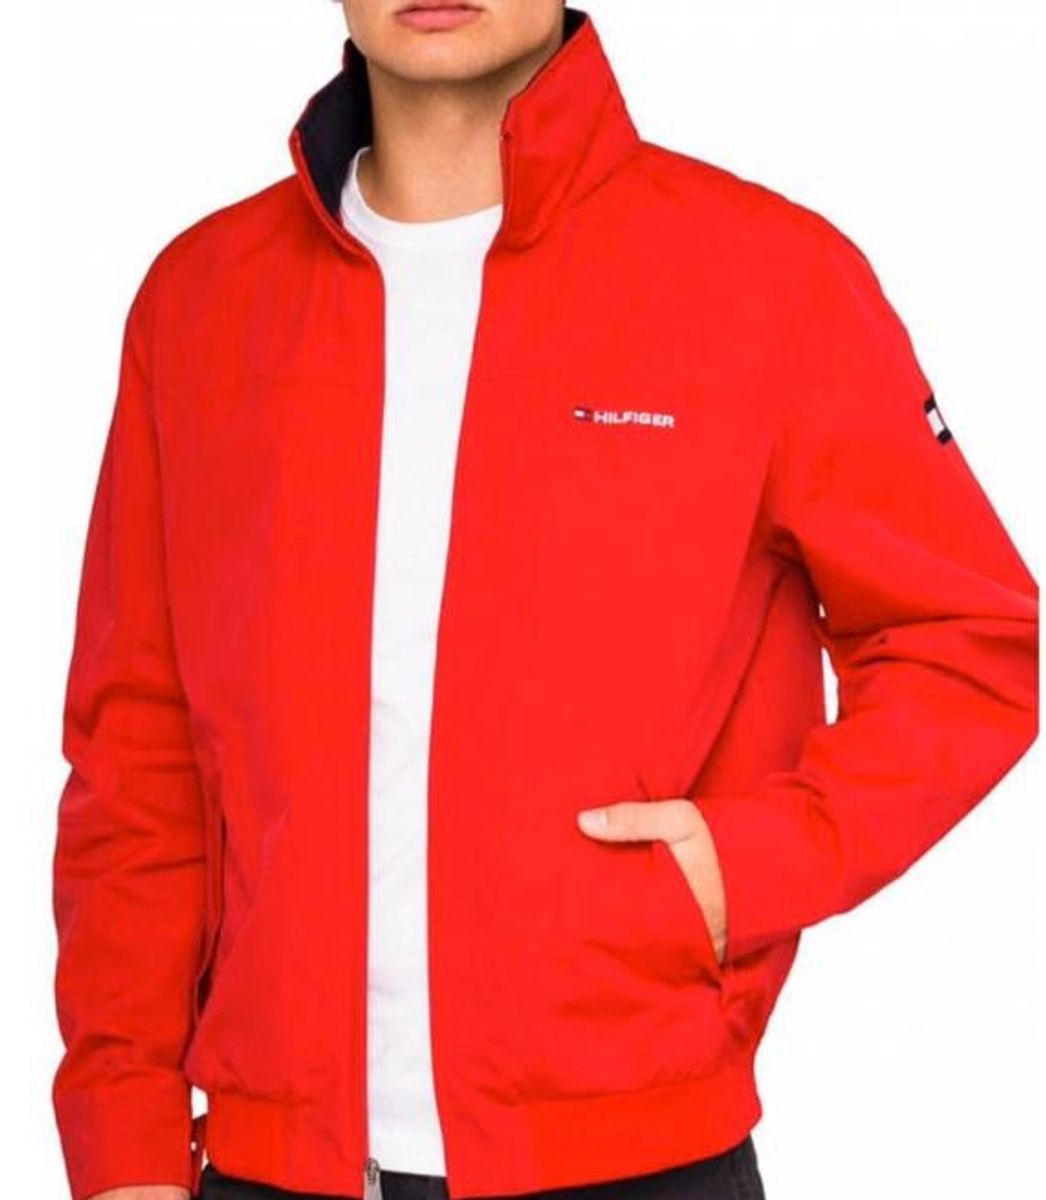 jaqueta tommy hilfiger masculina vermelha